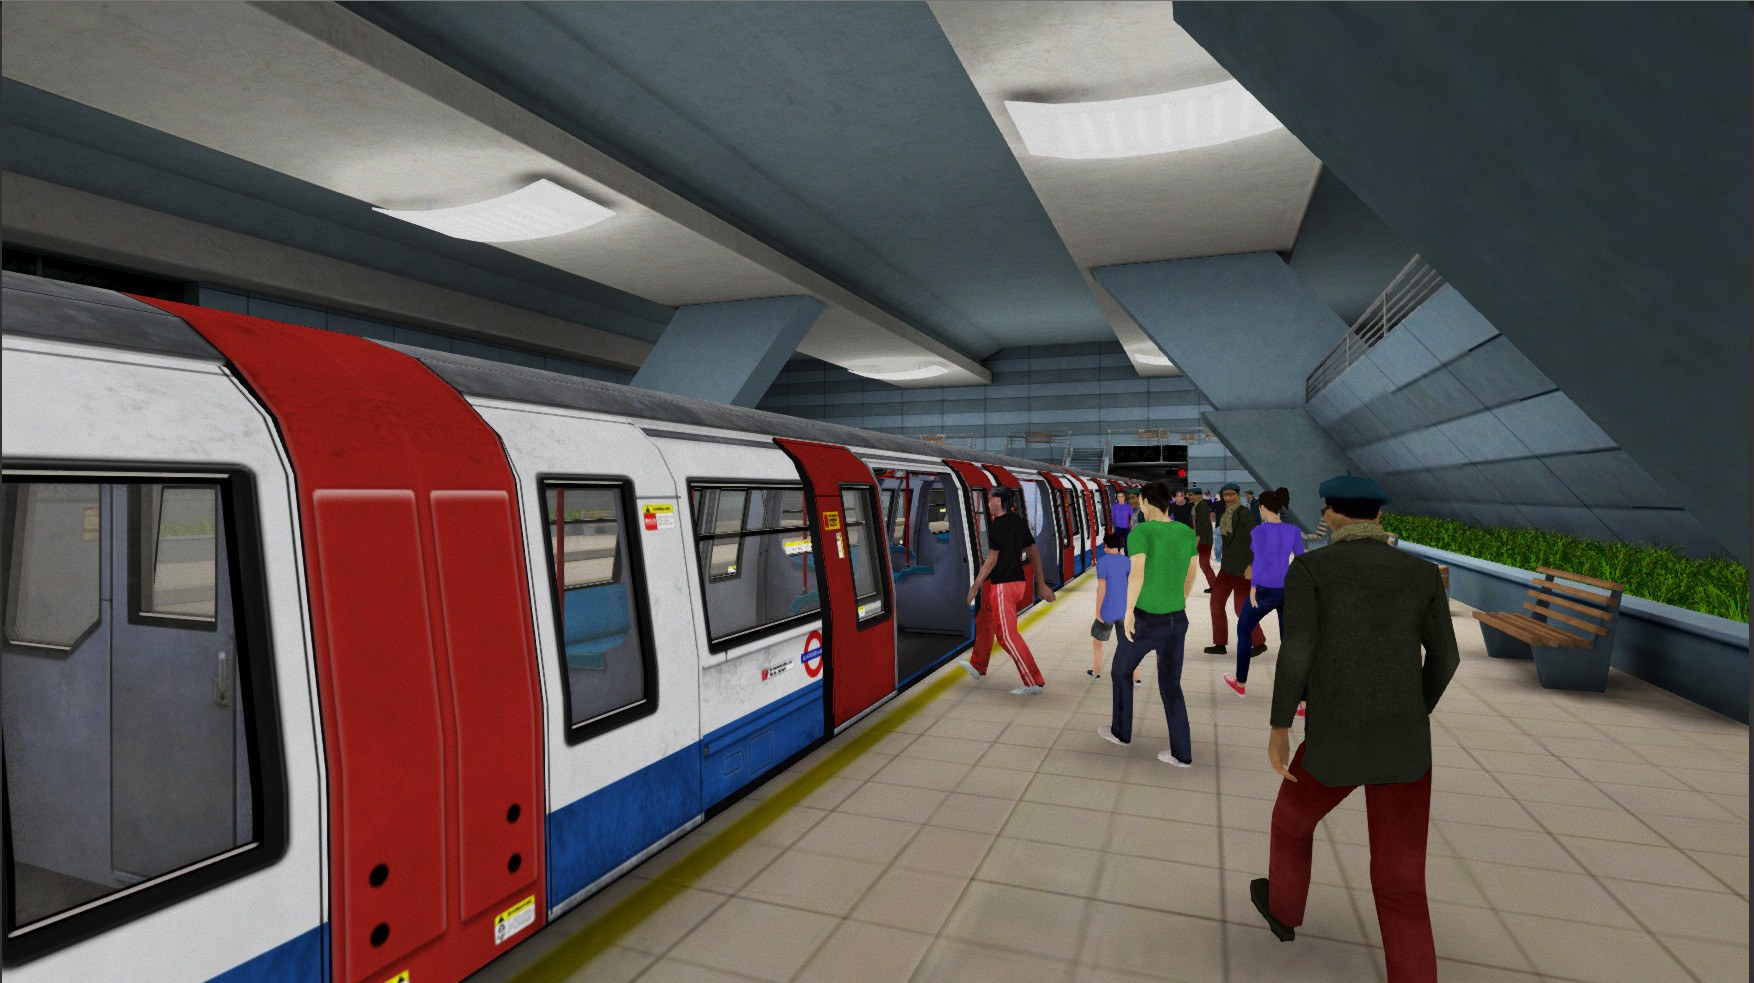 Метро играть. Игра Subway Metro. Игра Subway Simulator. Игра Subway симулятор метро. Метро Ташкента симулятор.